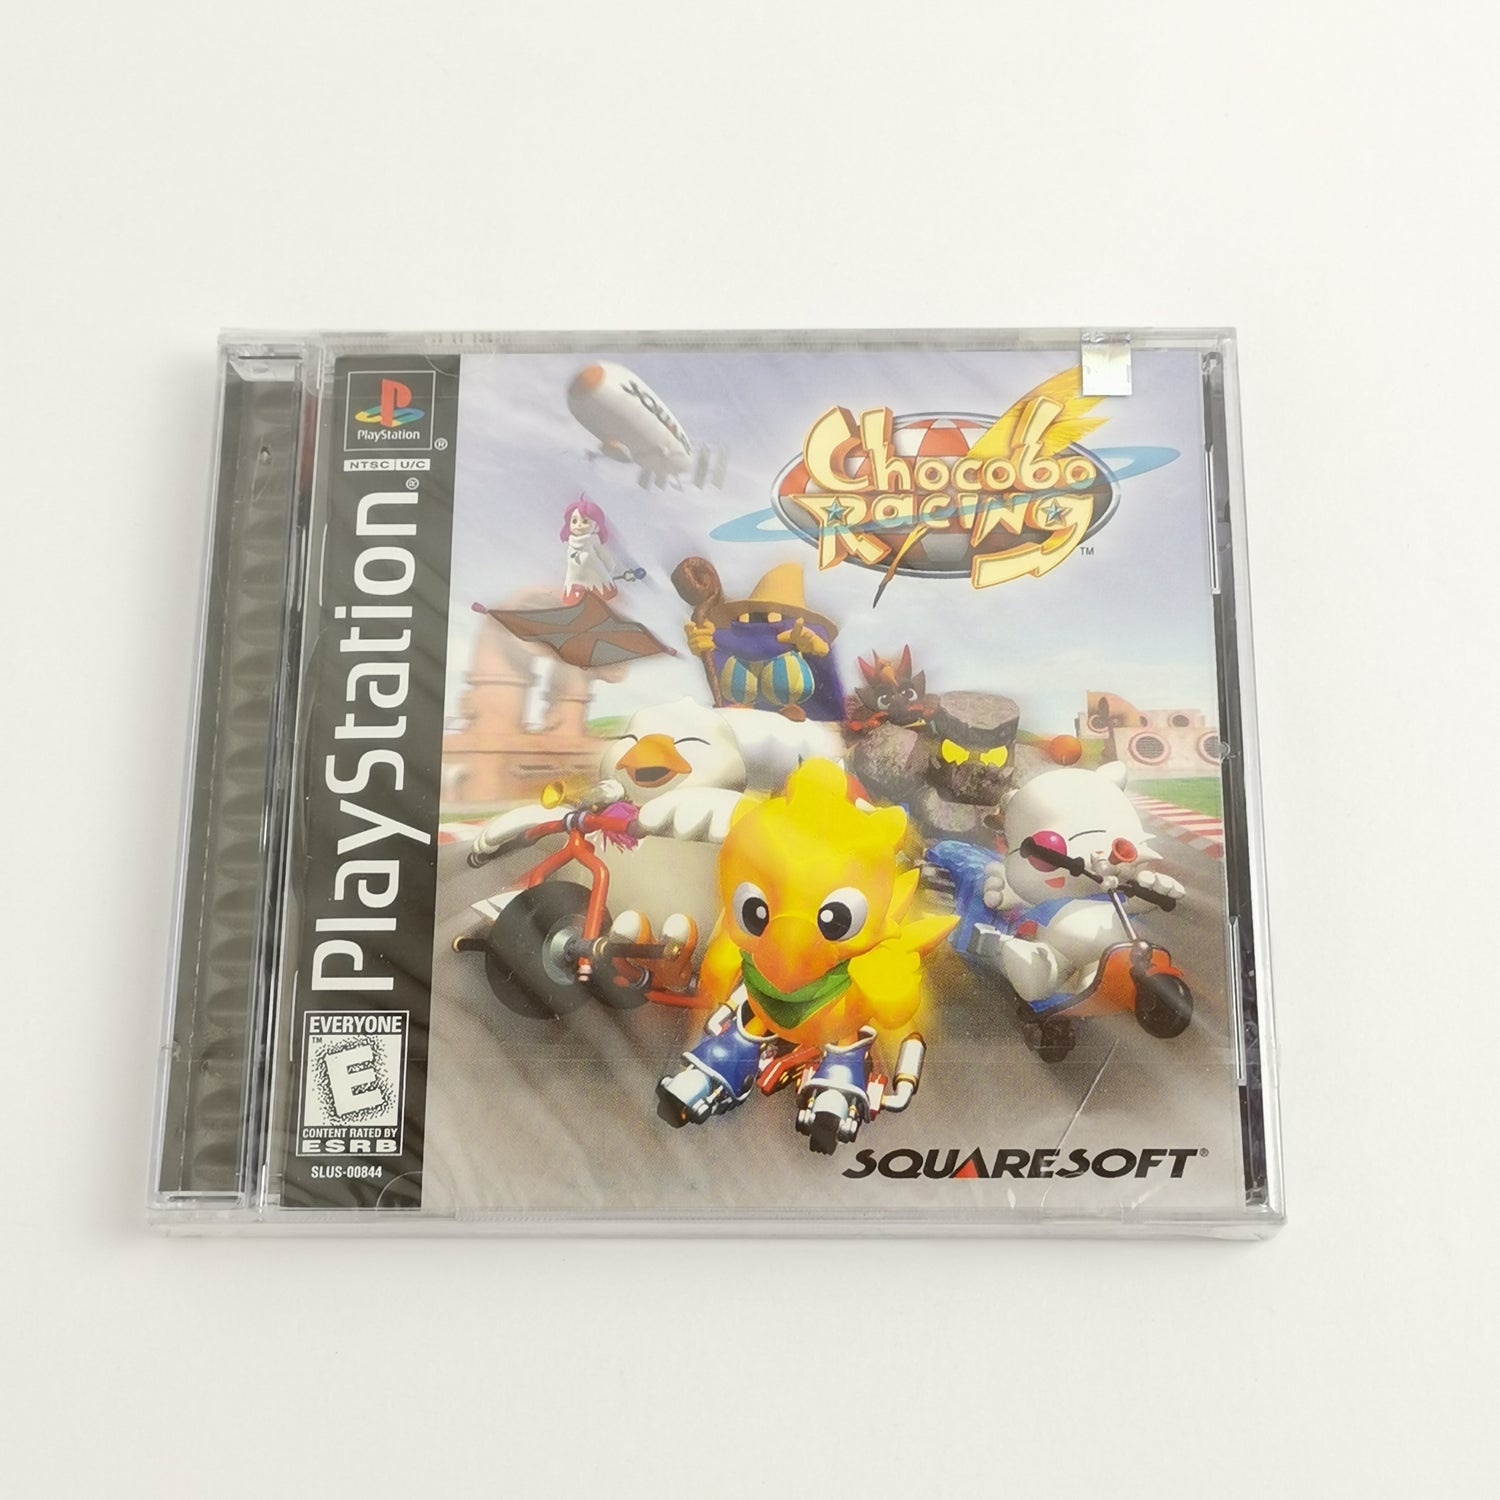 Sony Playstation 1 Game: Chocobo Racing | PS1 NTSC USA - NEW SEALED